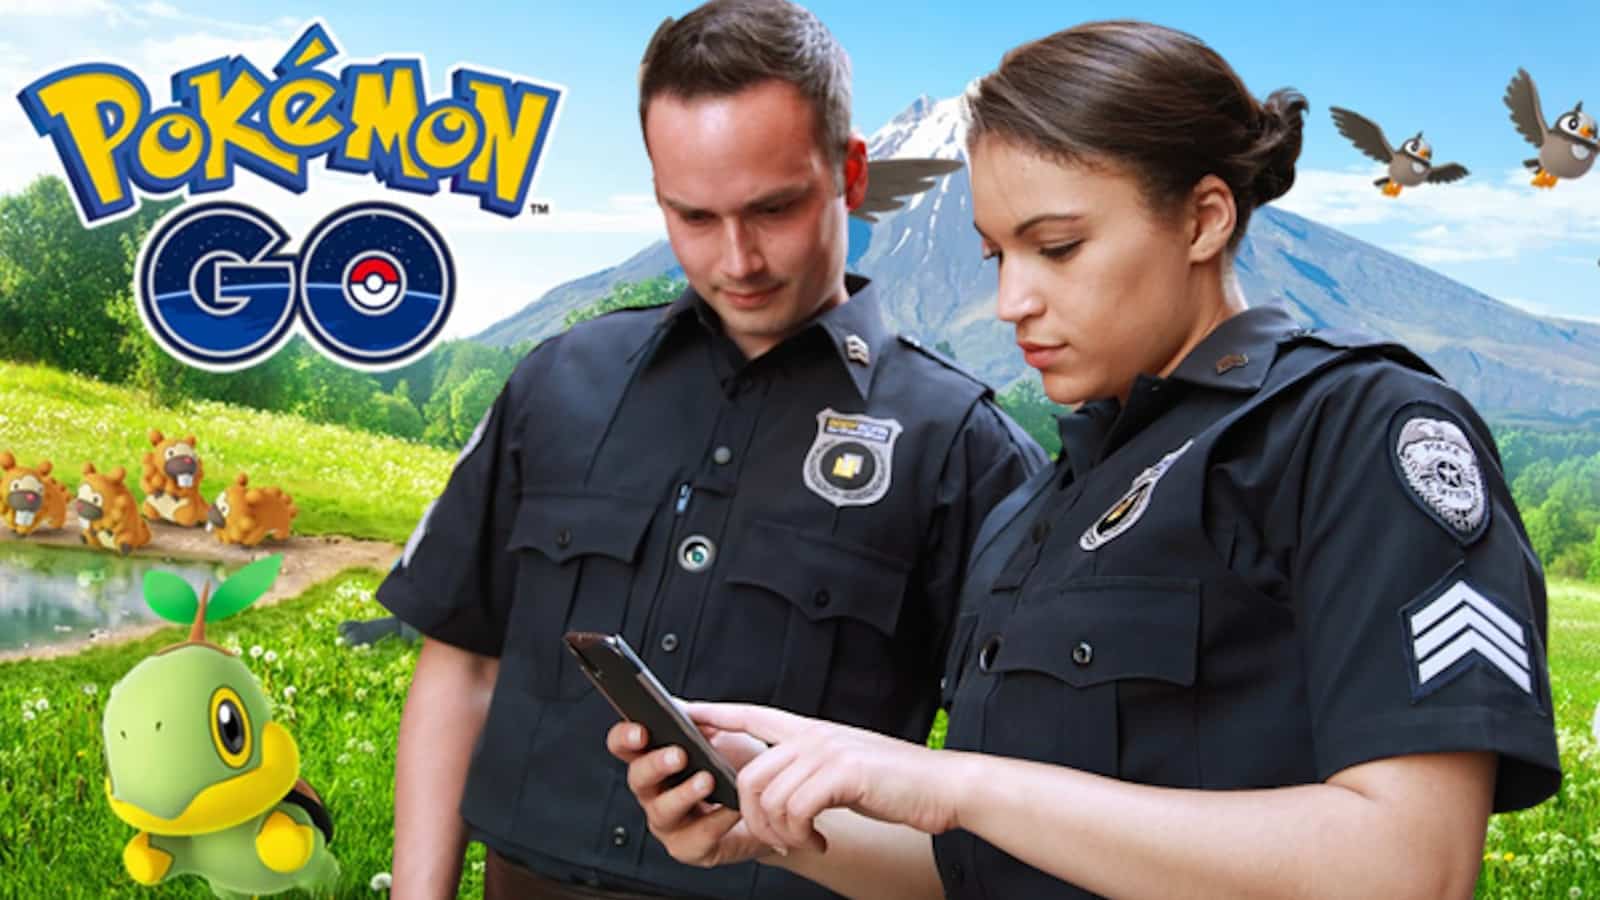 Pokemon go officers fired